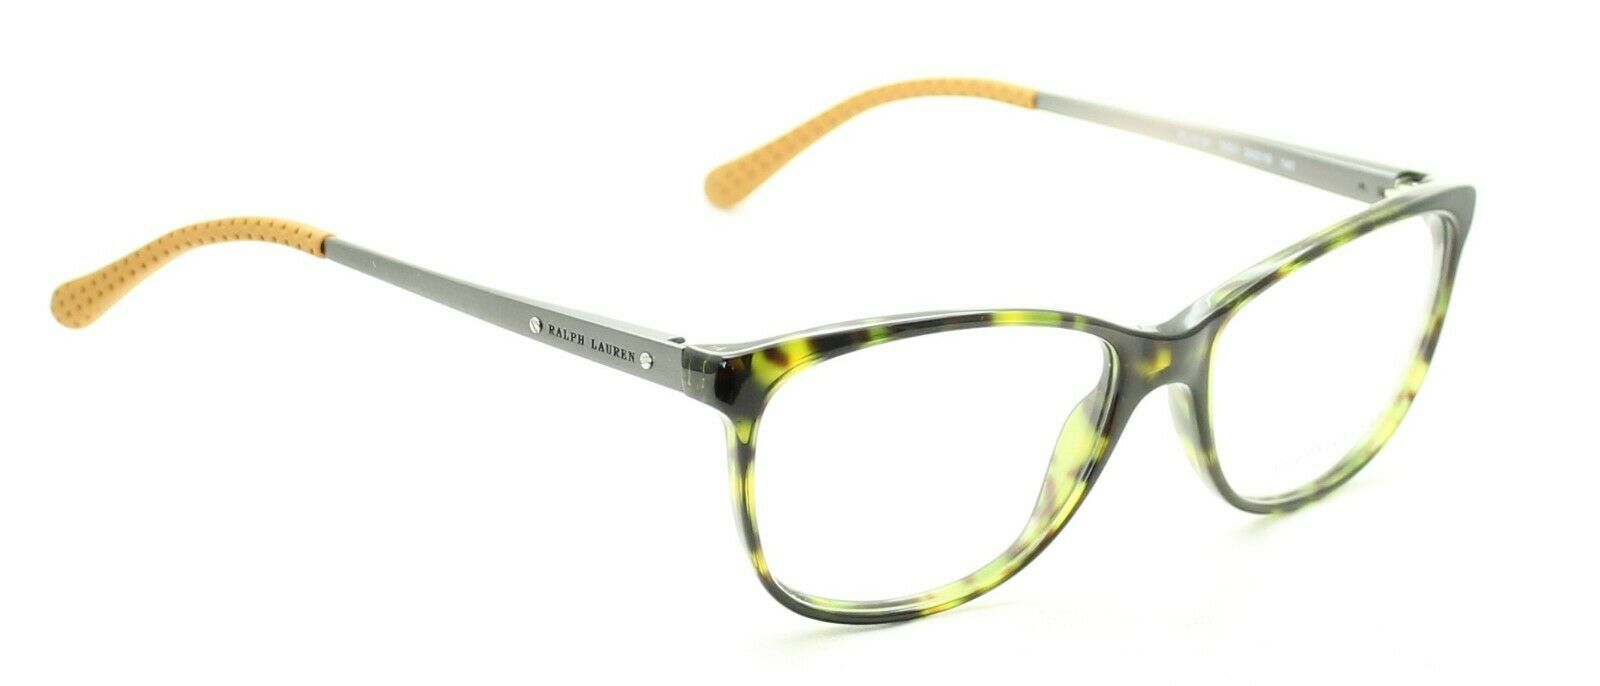 RALPH LAUREN RL6135 5003 54mm RX Optical Eyewear FRAMES Eyeglasses Glasses - New